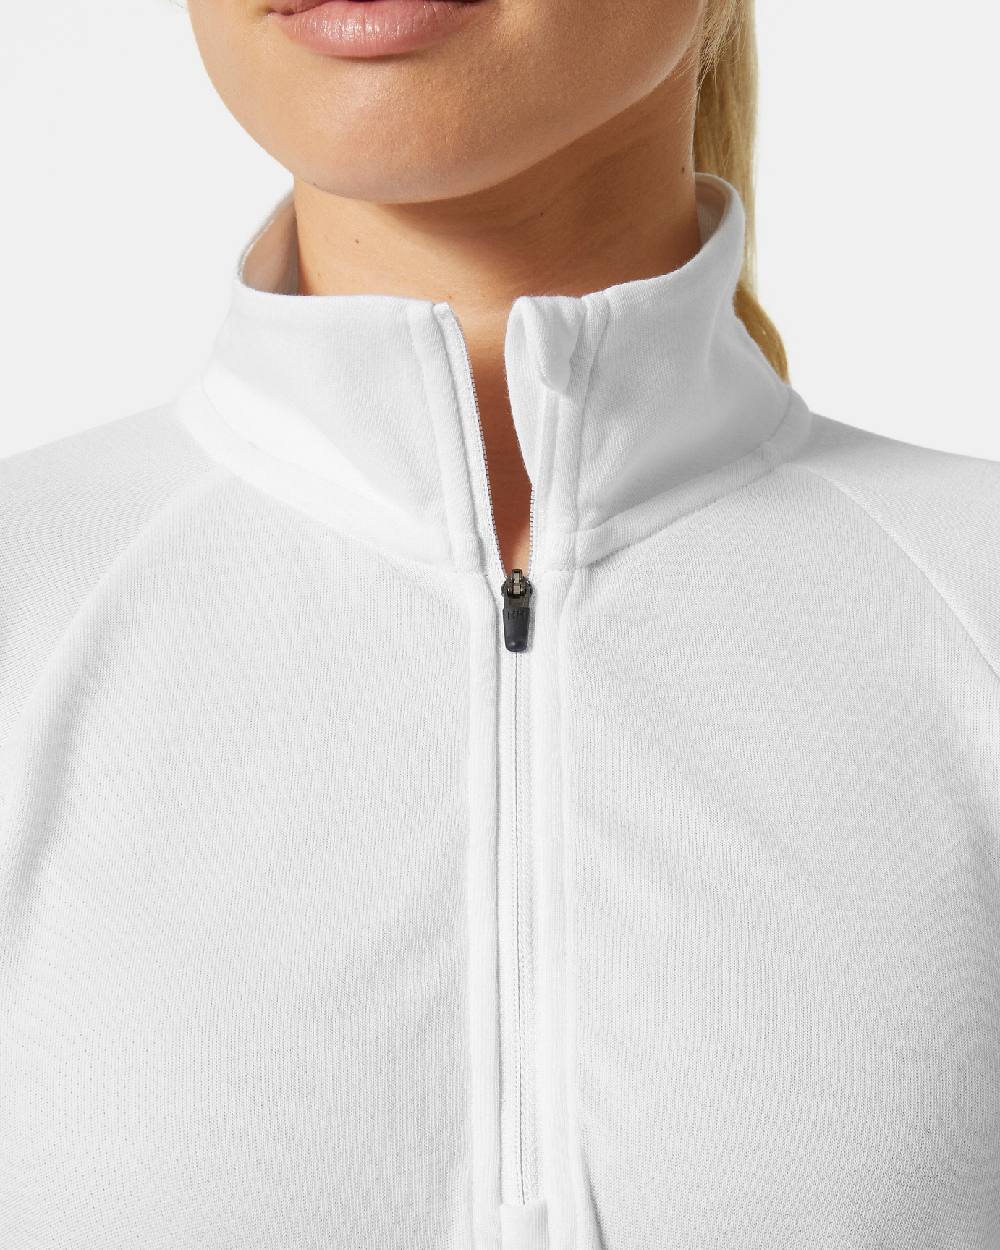 White coloured Helly Hansen Womens Inshore Half Zip Pullover on grey background 